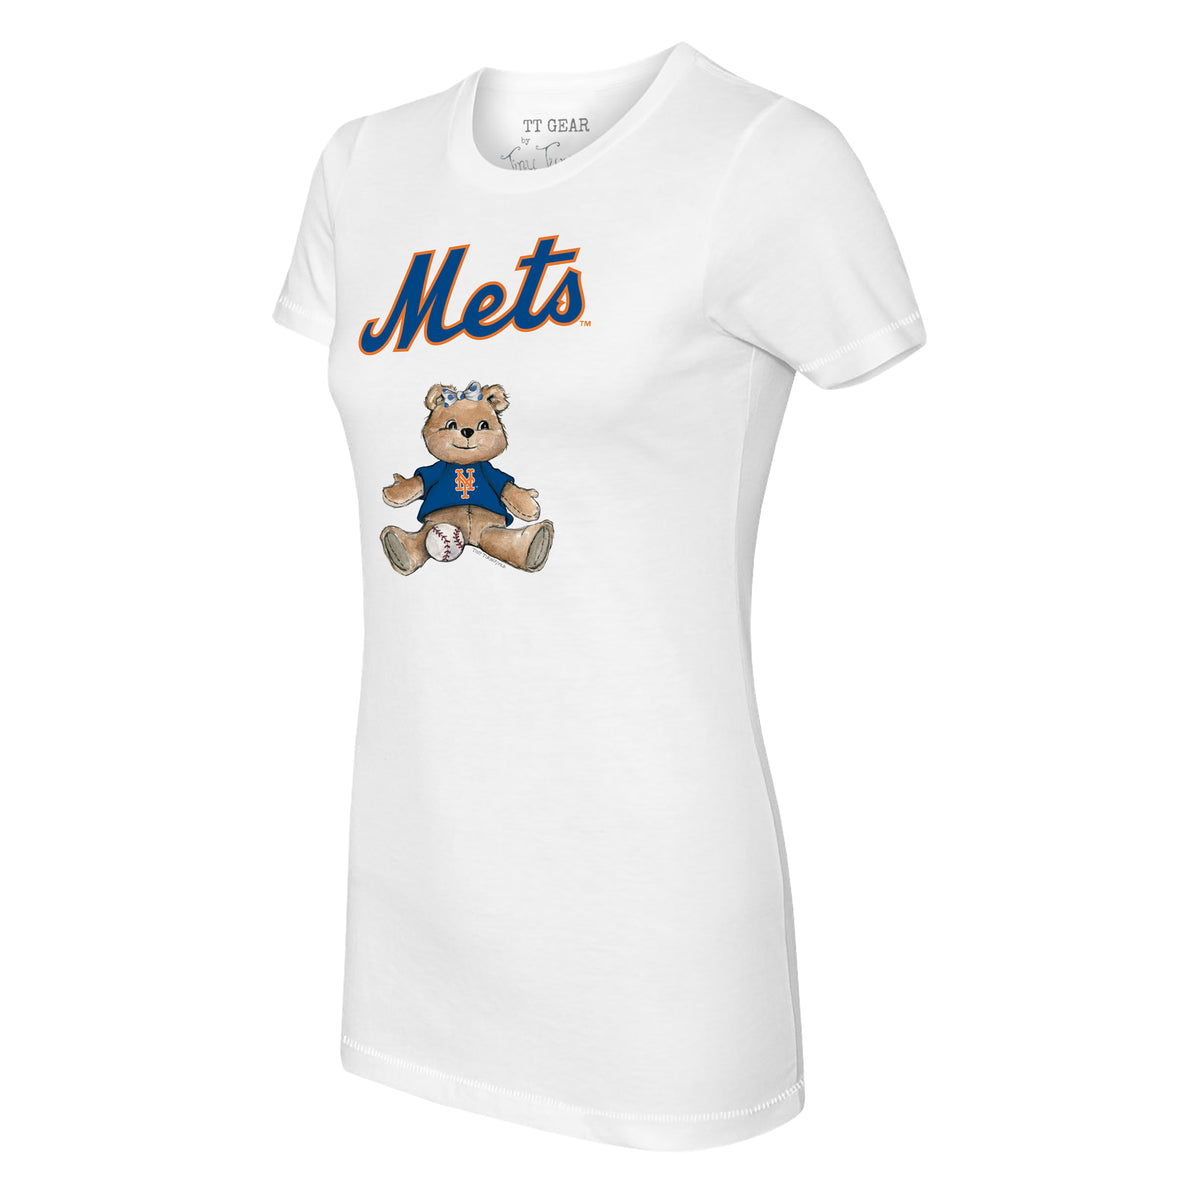 Lids New York Mets Tiny Turnip Youth Military Star T-Shirt - White